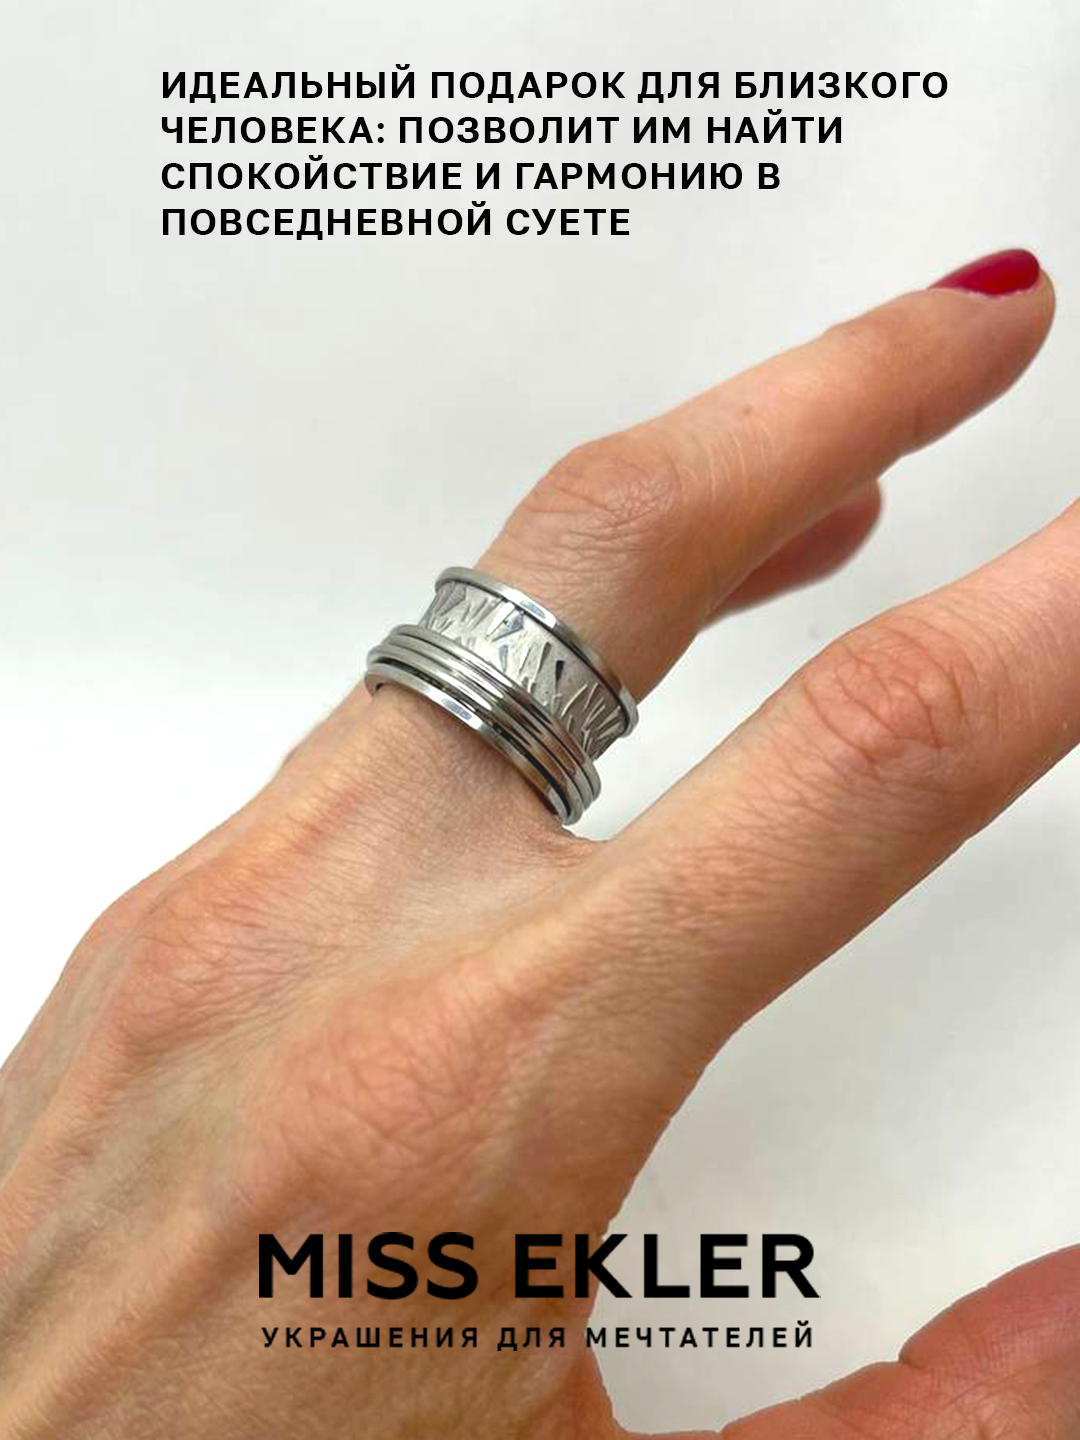 Кольцо-механизм Miss Ekler Антистресс от Miss Ekler